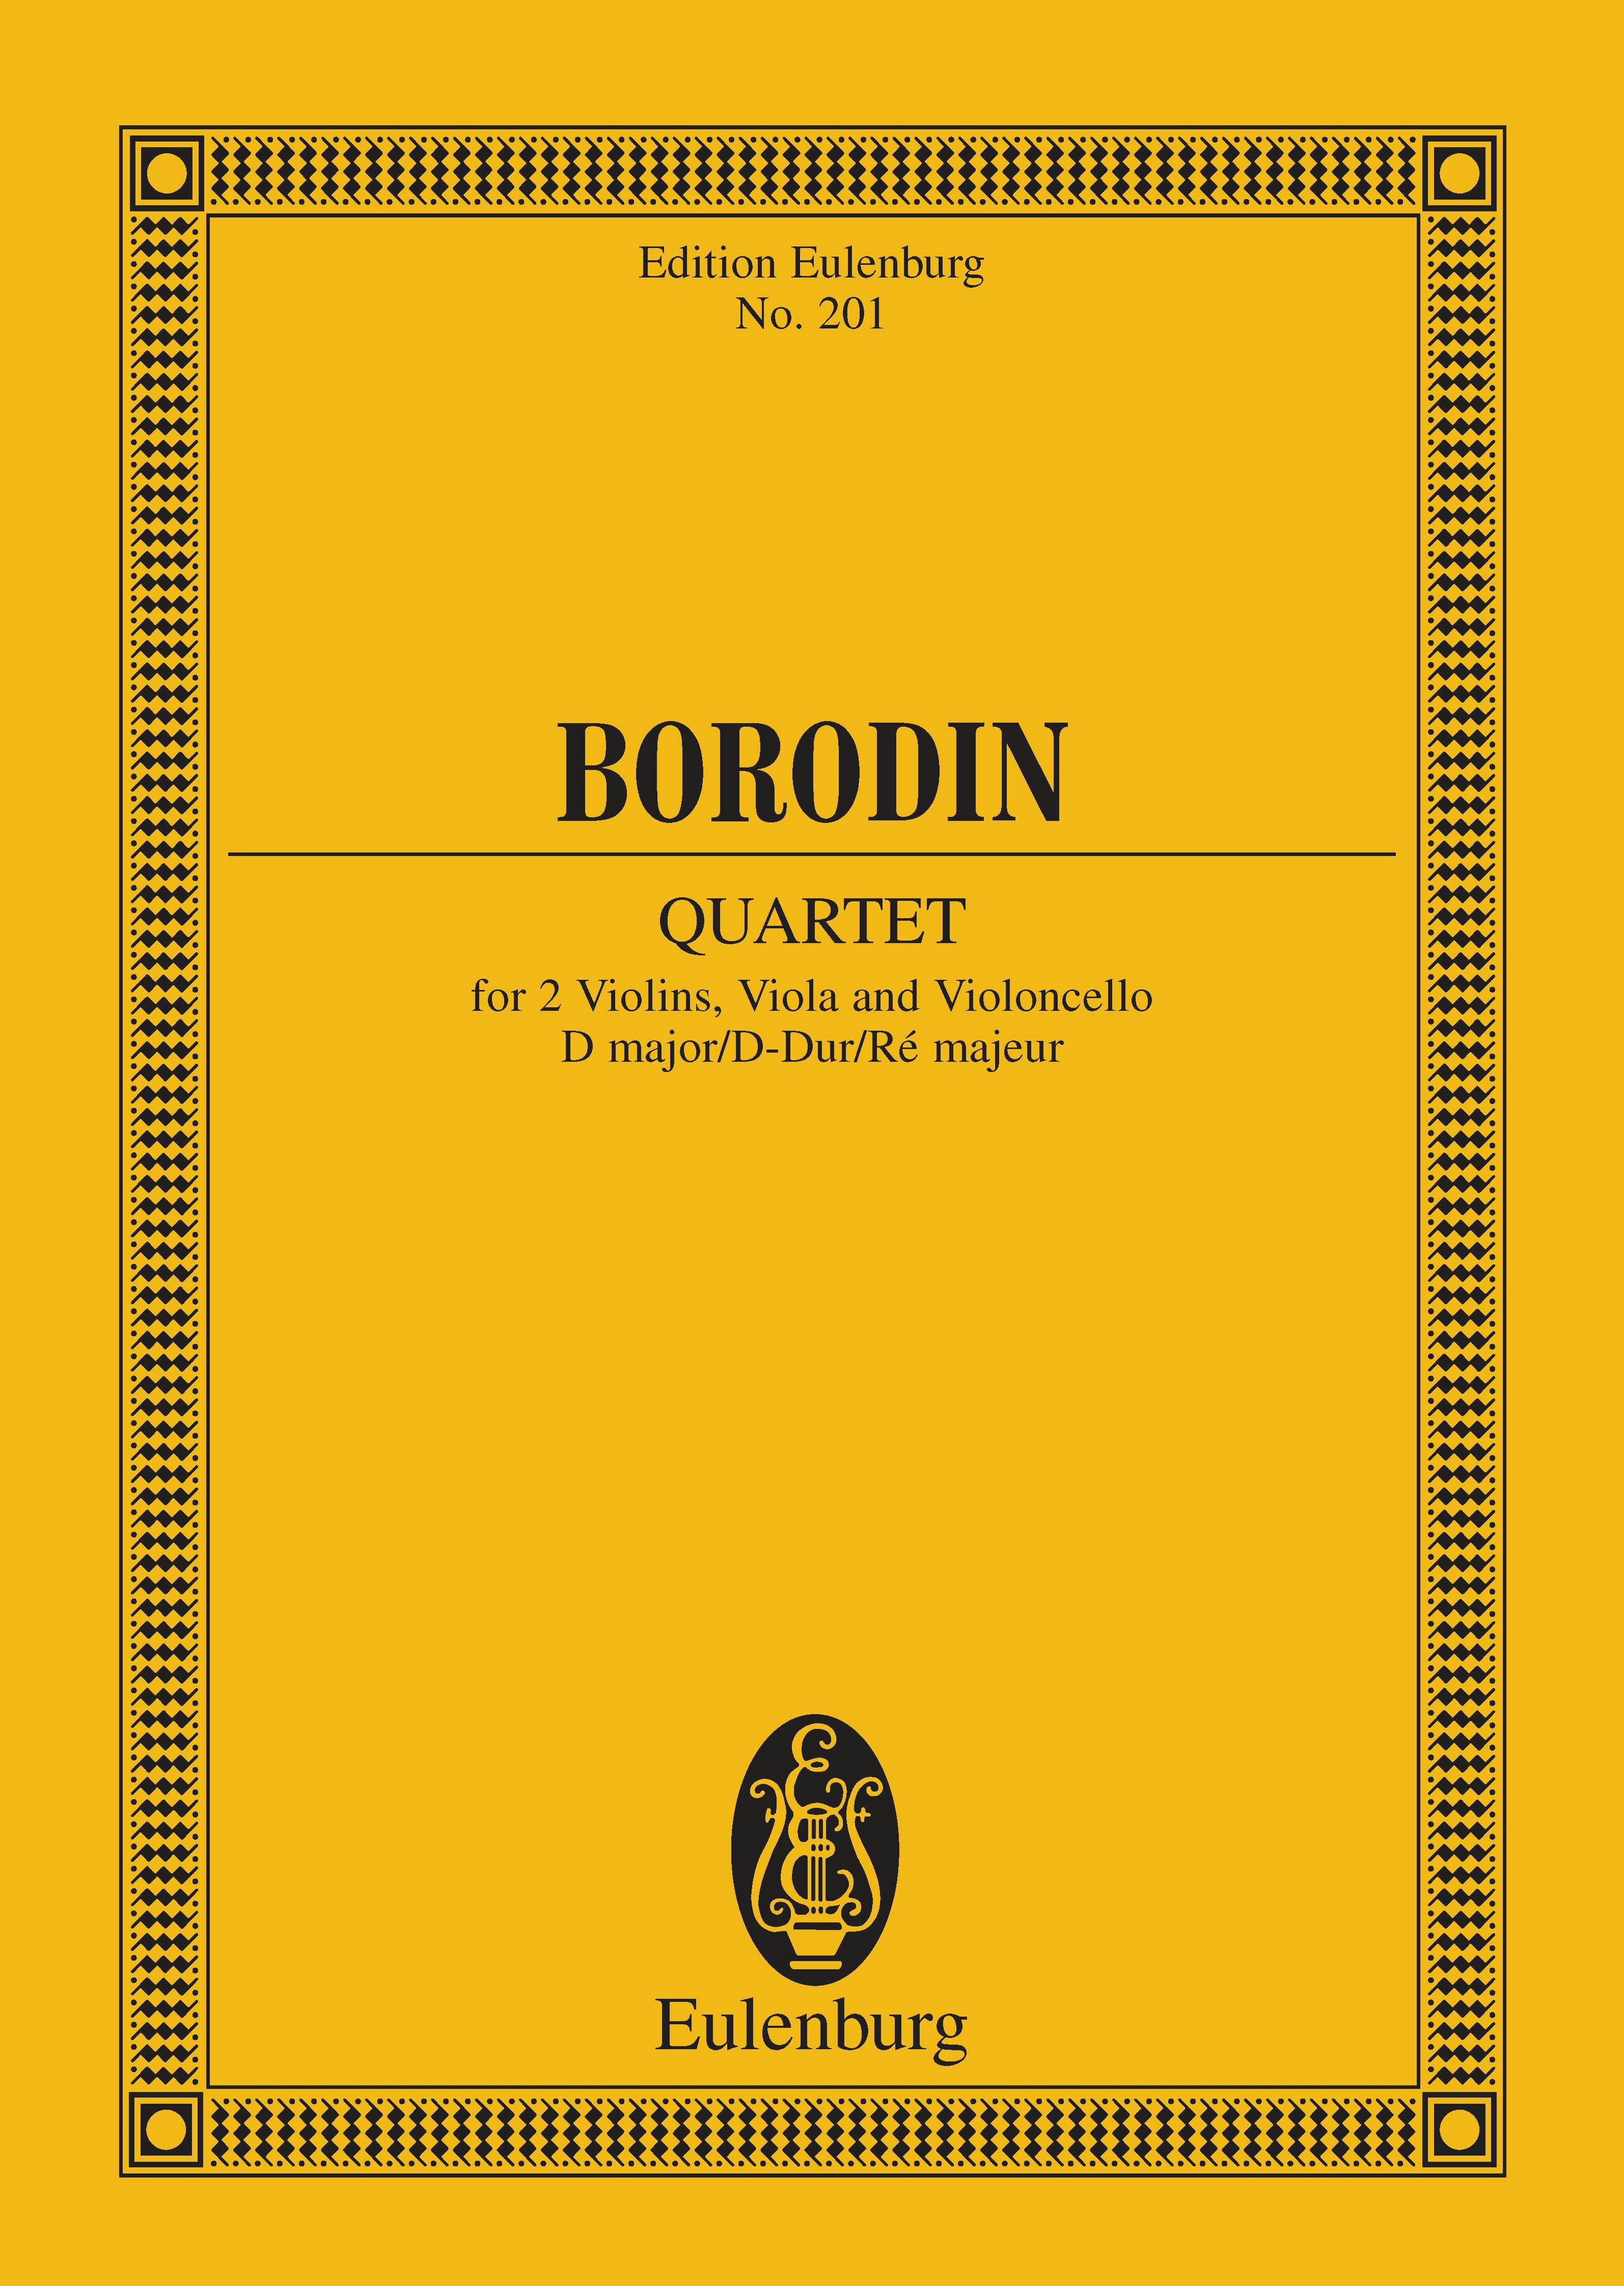 String Quartet No. 2 D major - Alexander Borodin